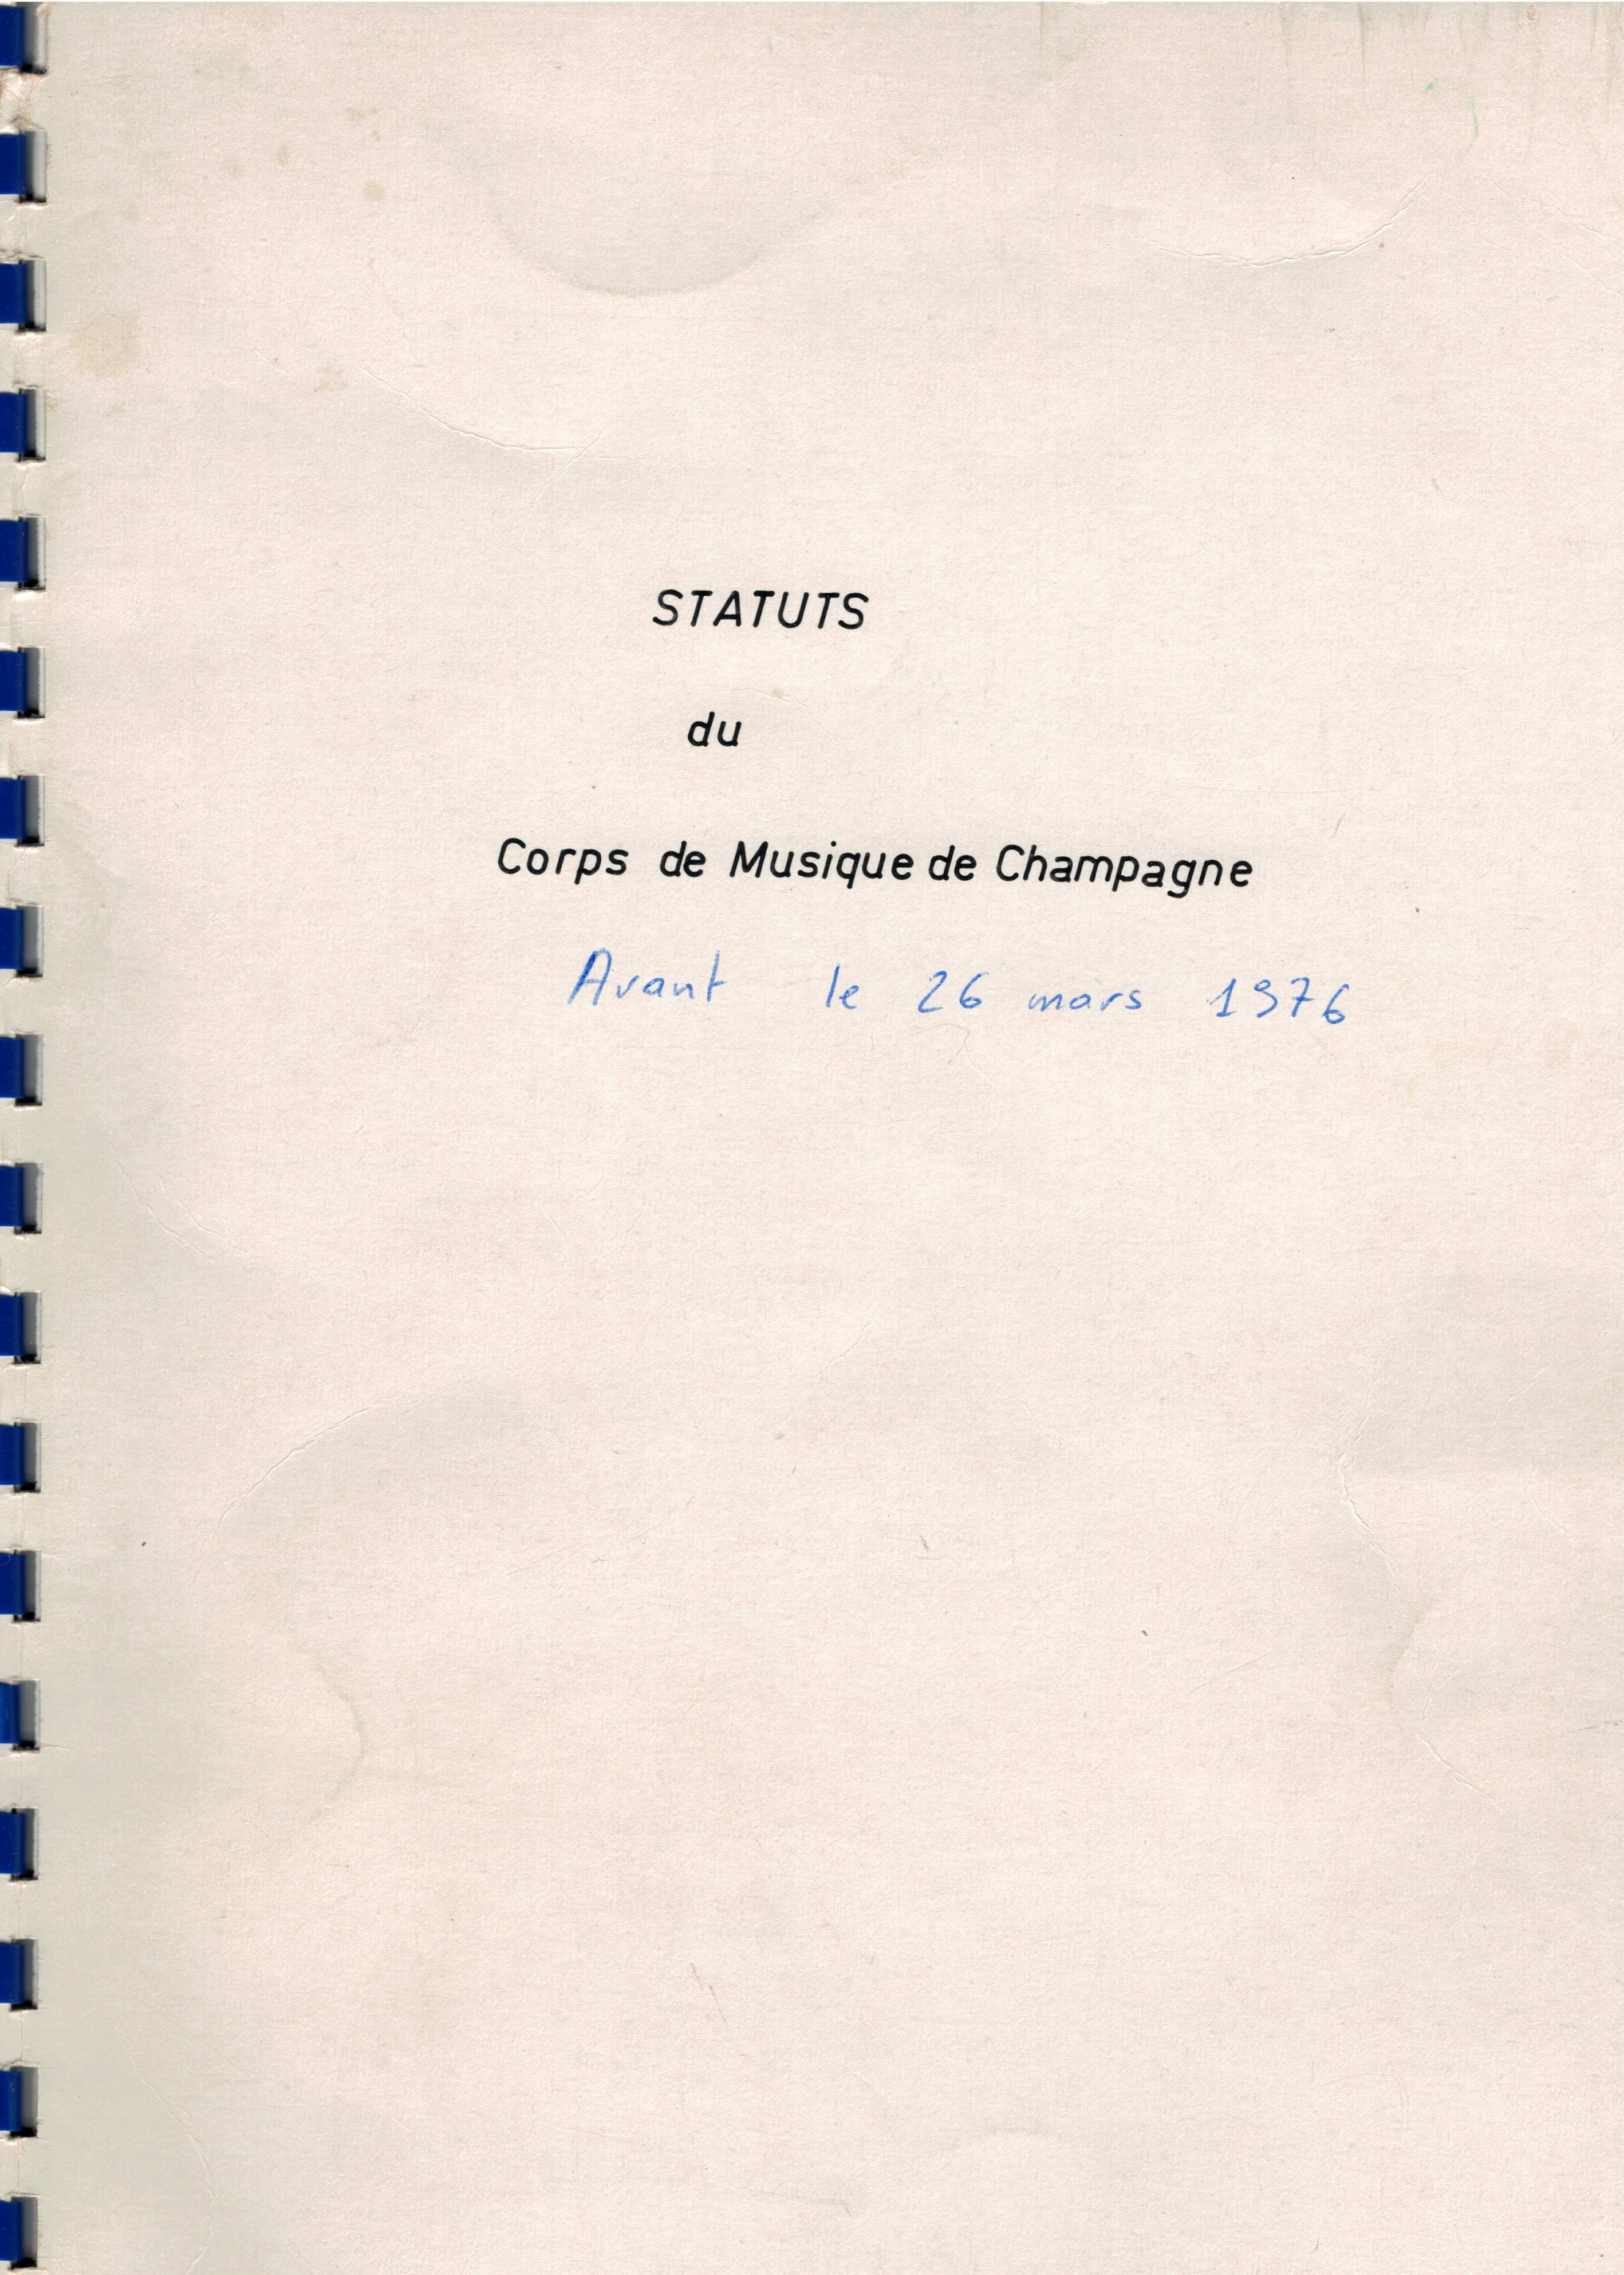 1976 Statuts